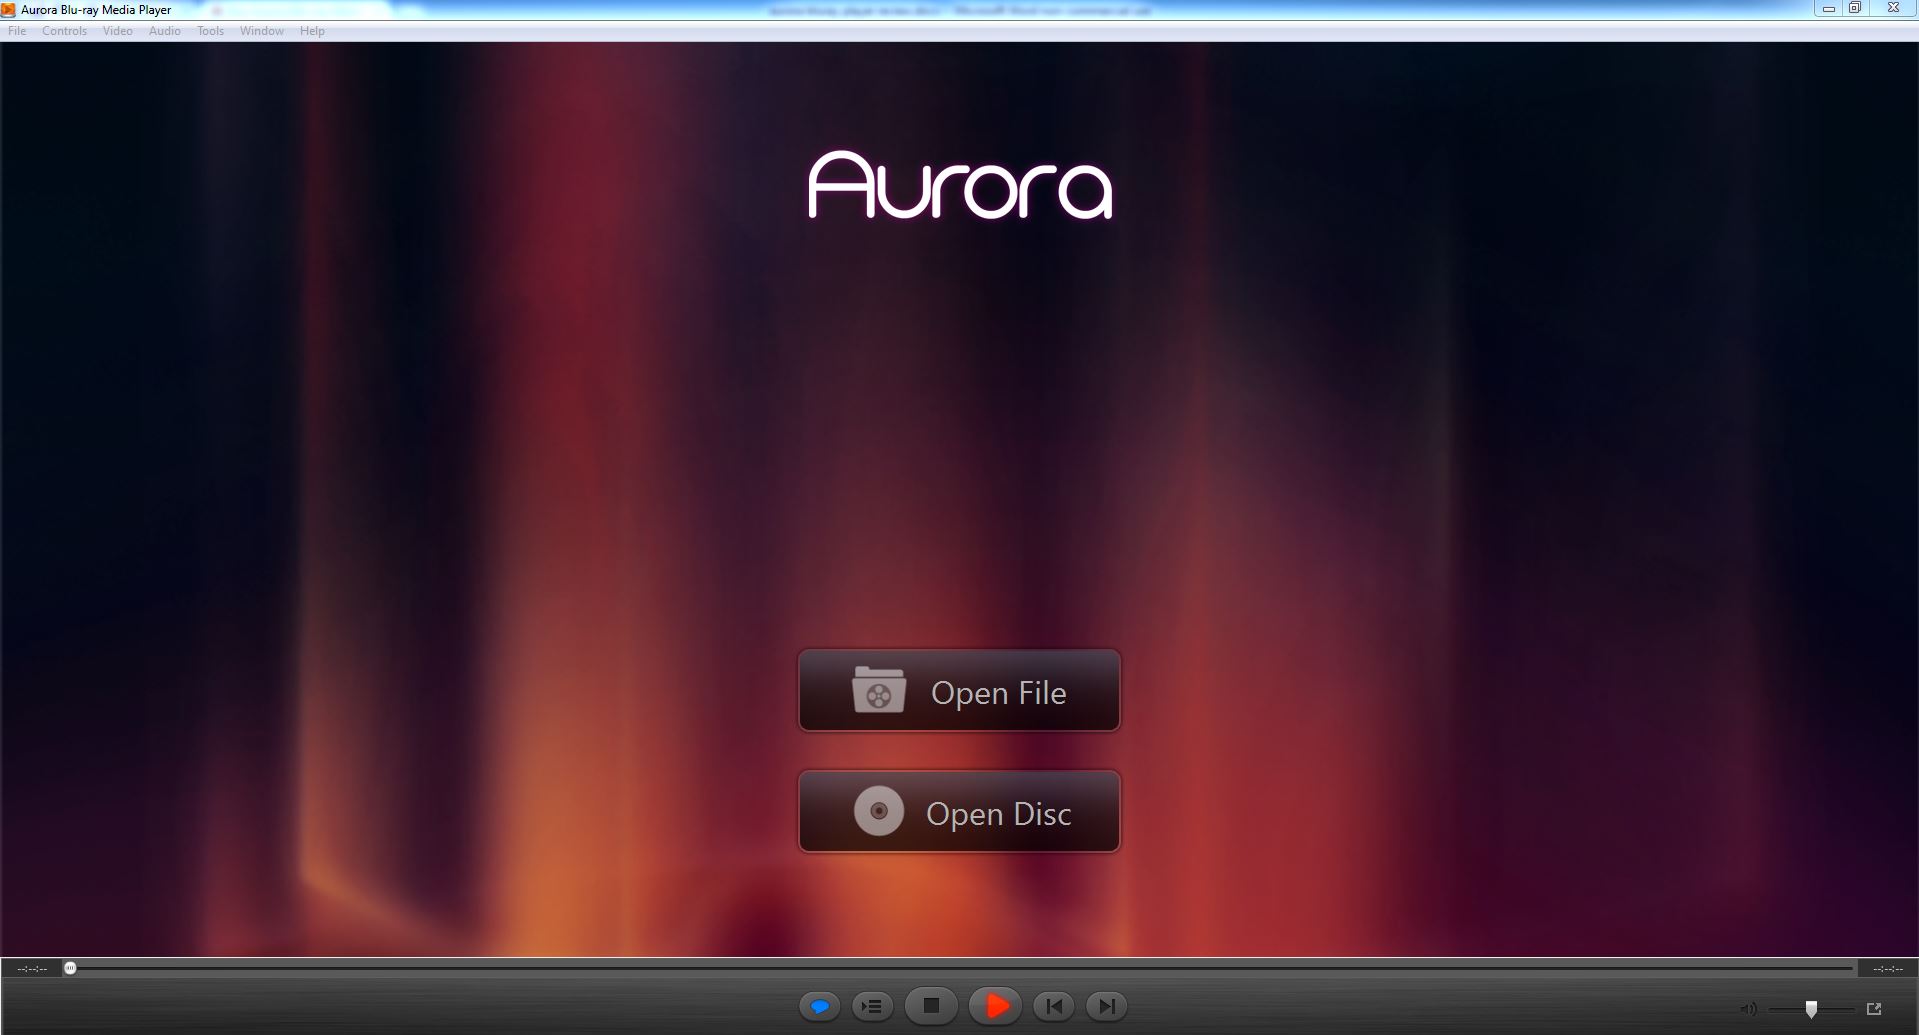 Aurora Blu-ray Media Player License Key